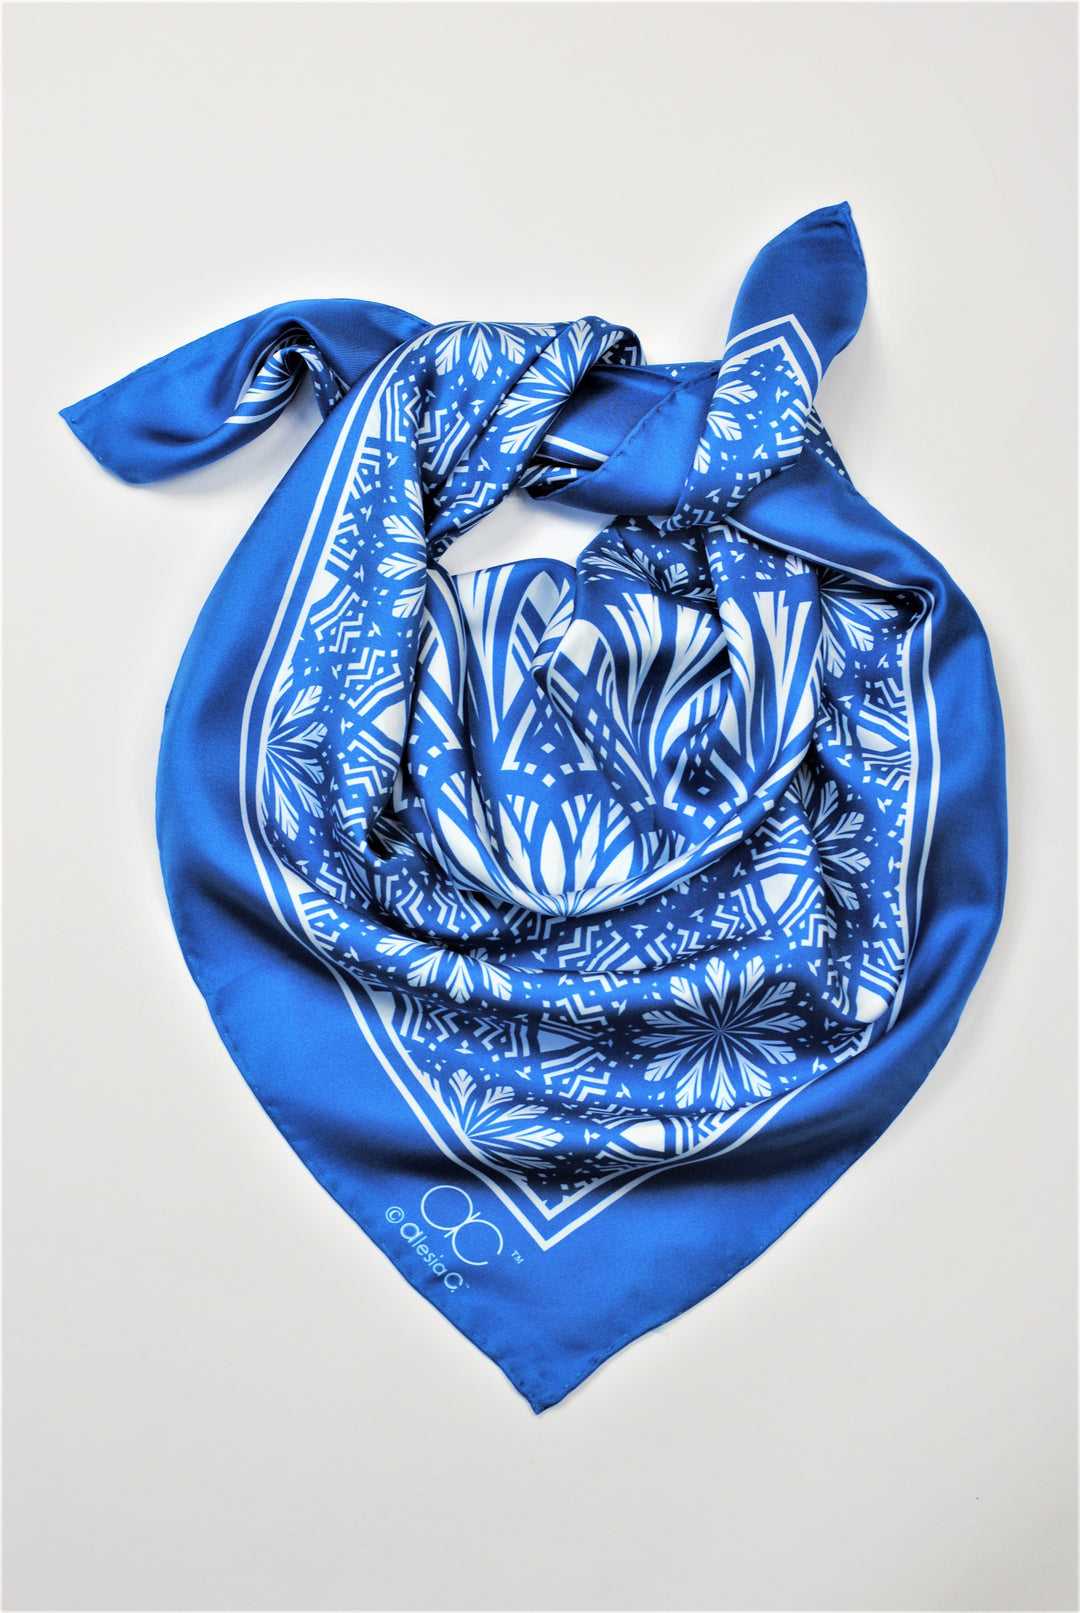 SERENITY Mandala Art Pure Silk Scarf in Blue White Alesia C.